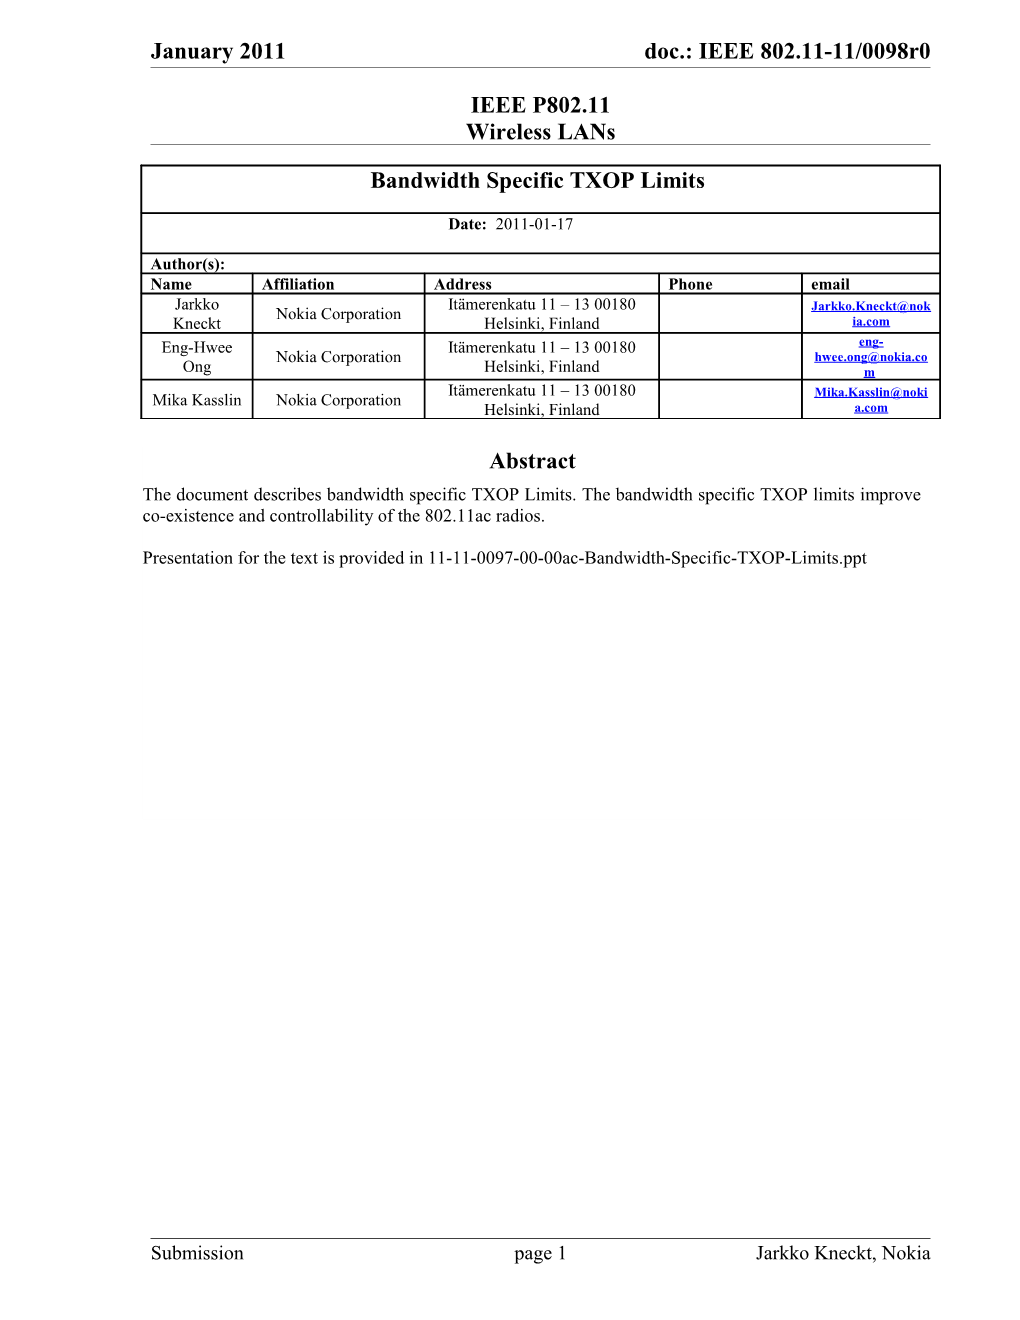 6.3.6.1.4 Bandwidth Specific Txoplimits Parameter Set